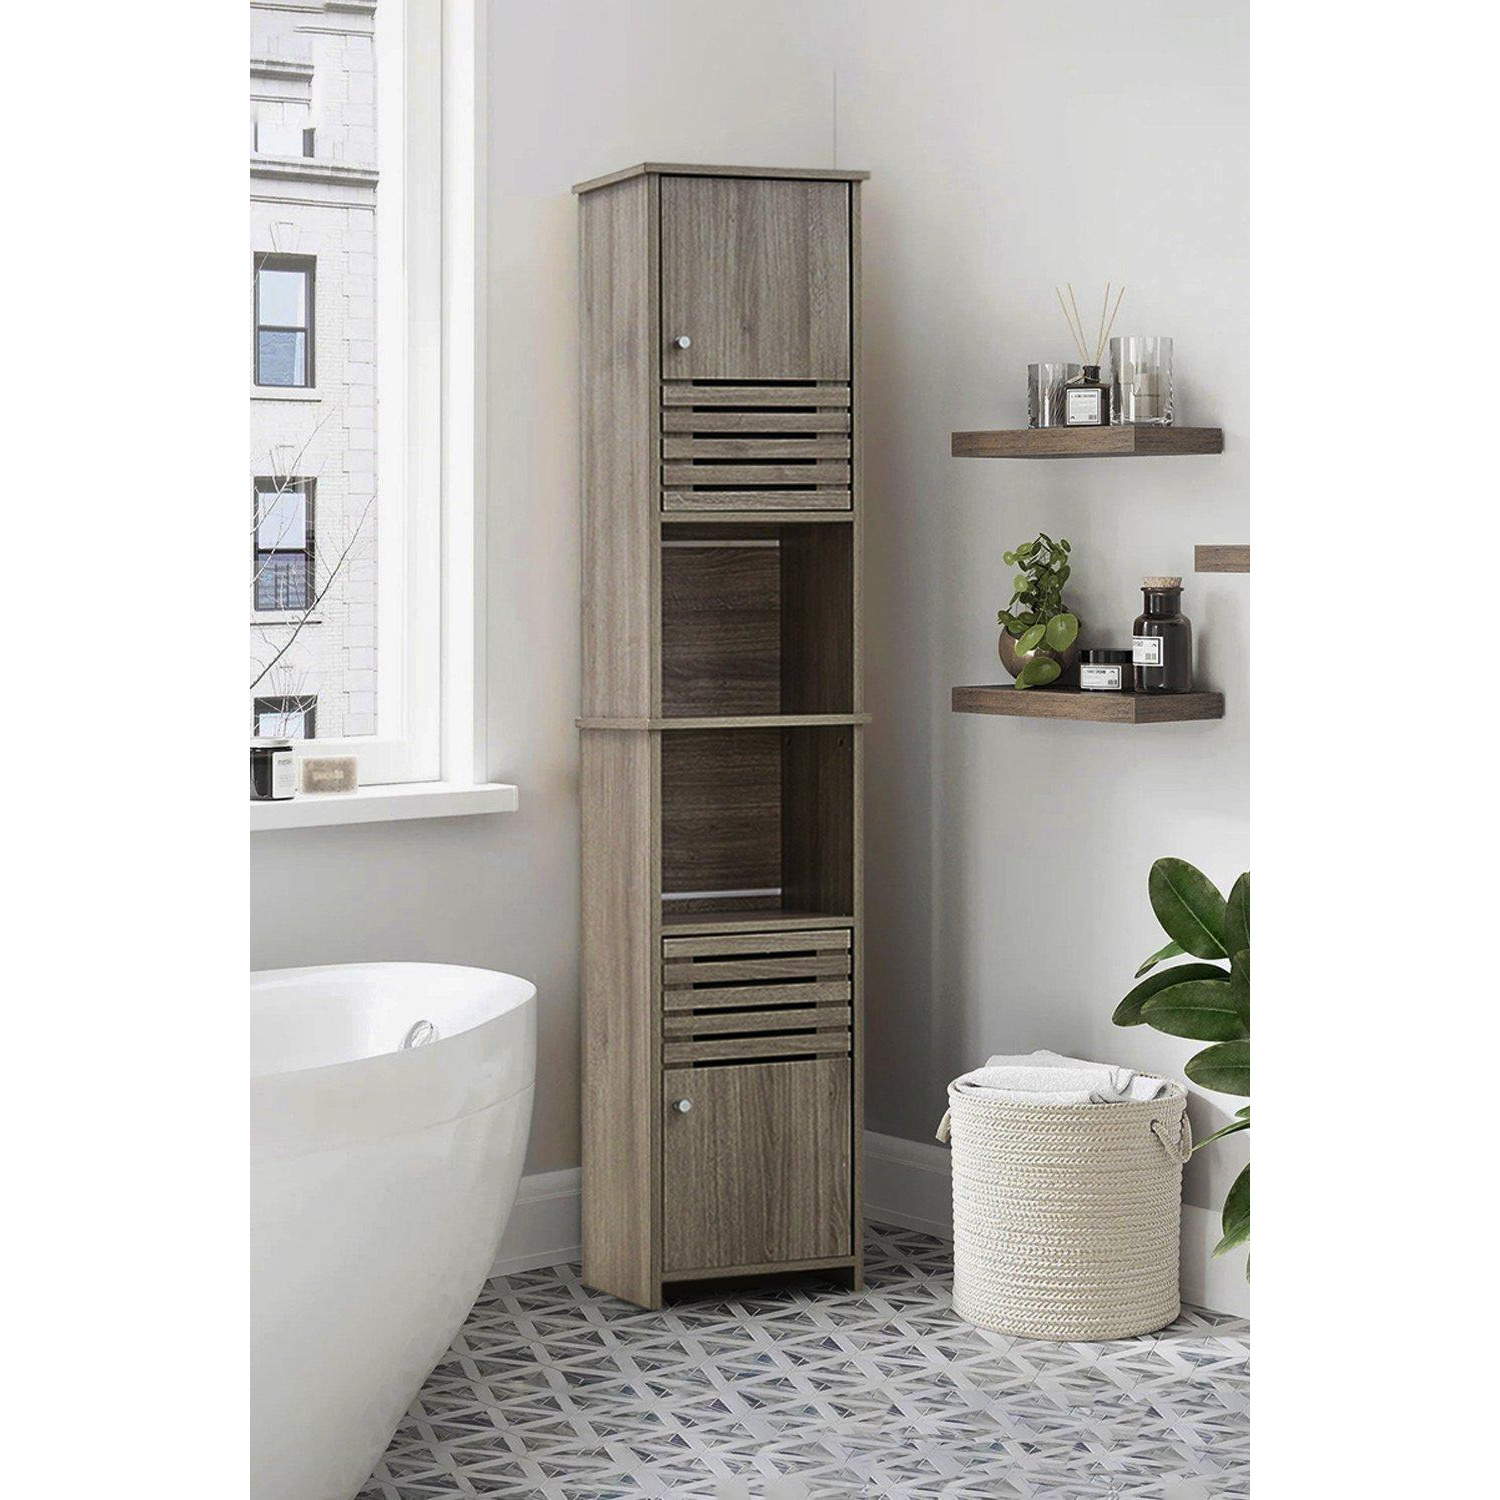 Freestanding Tall Bathroom Storage Cabinet - image 1